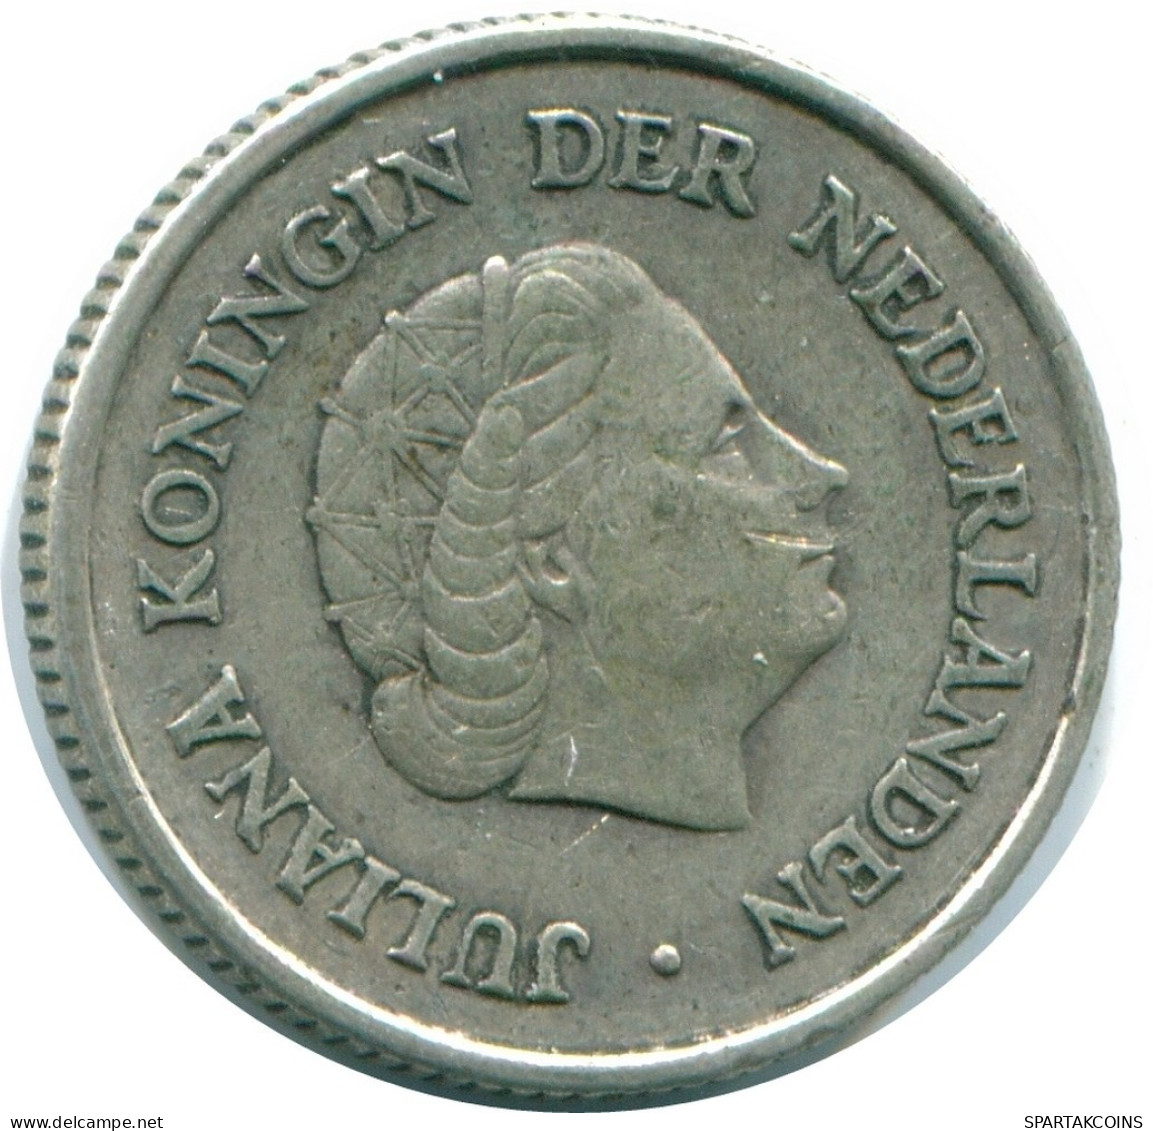 1/4 GULDEN 1962 NETHERLANDS ANTILLES SILVER Colonial Coin #NL11147.4.U.A - Antilles Néerlandaises